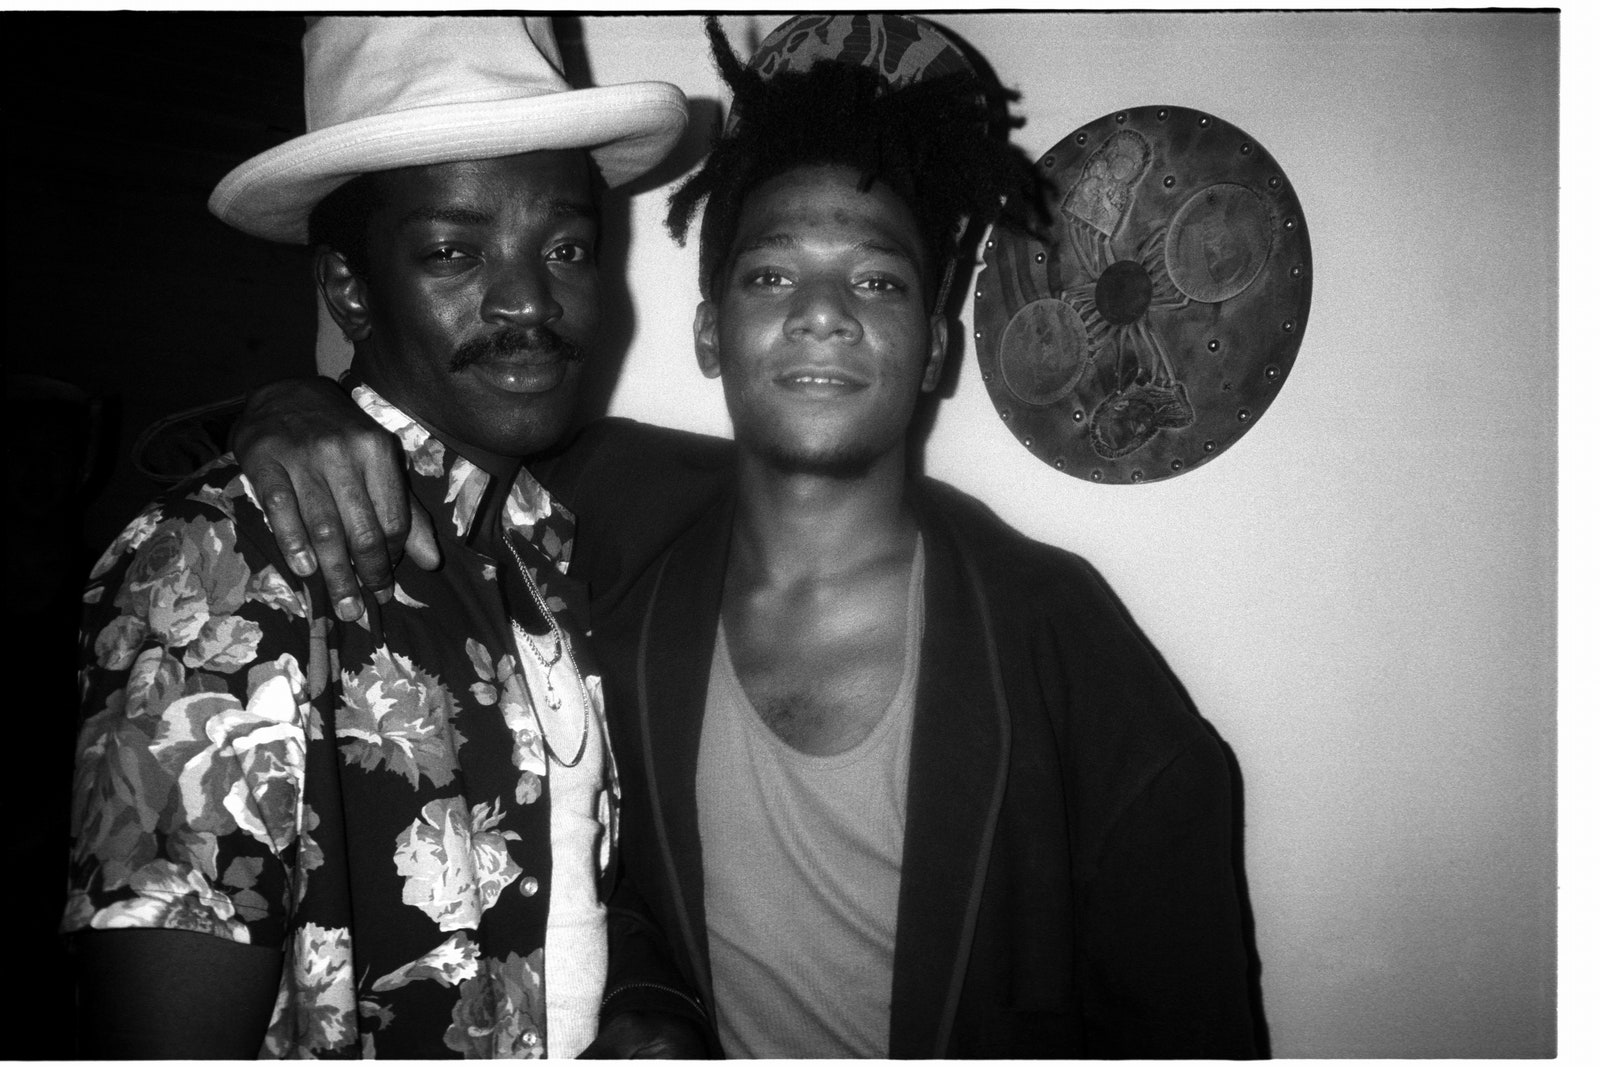 Brathwaite and JeanMichel Basquiat at Anita Sarkos Voodoo Party at the Palladium New York City 1986.